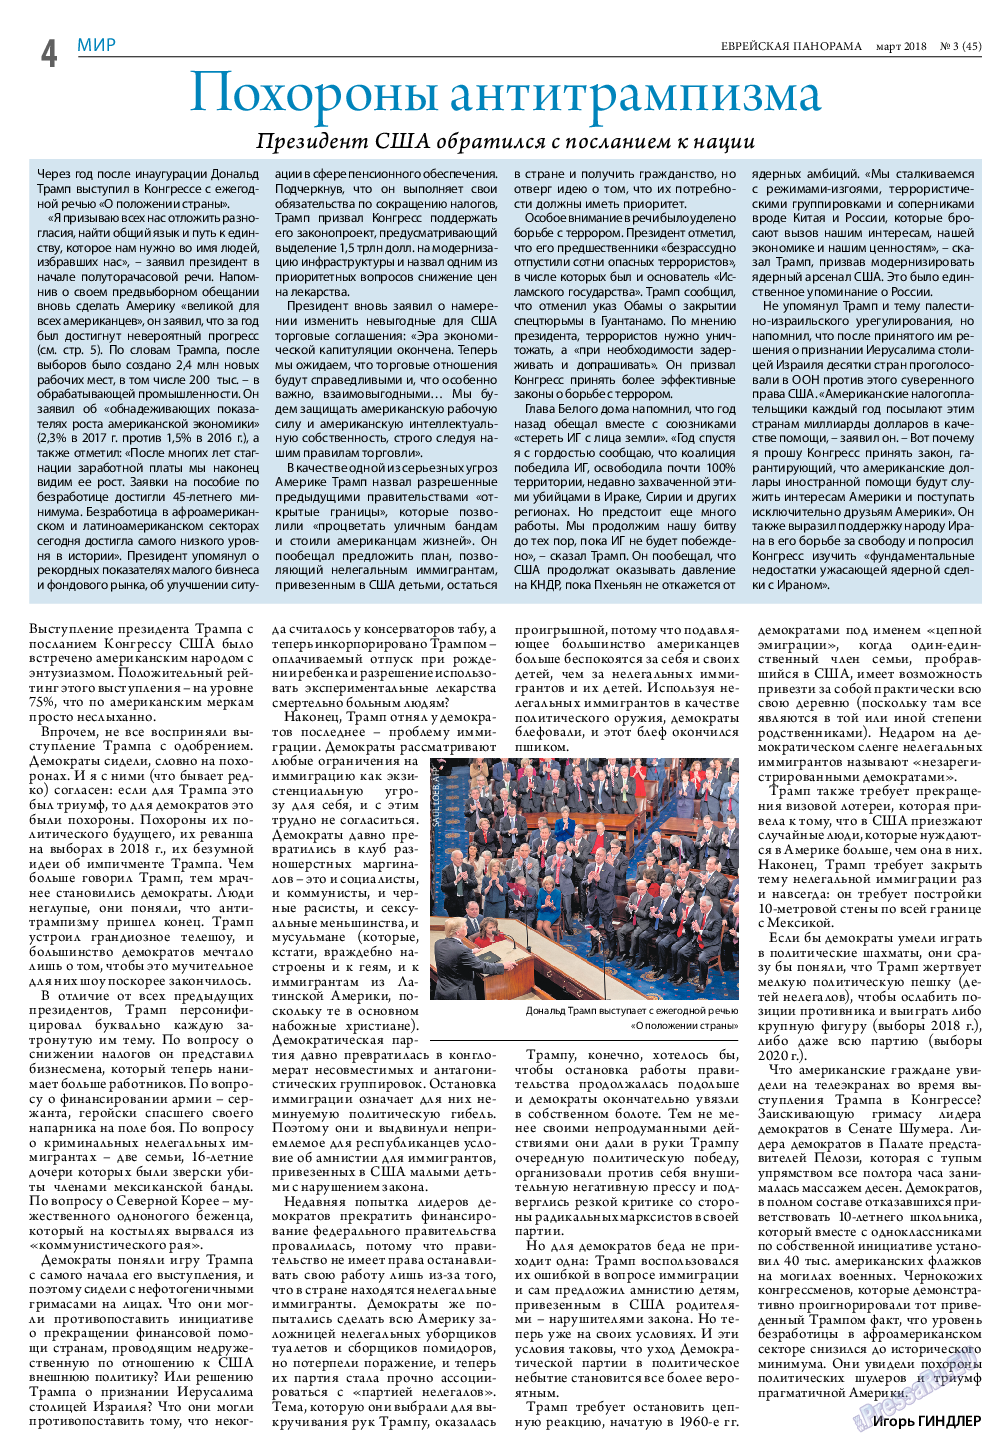 Еврейская панорама, газета. 2018 №3 стр.4